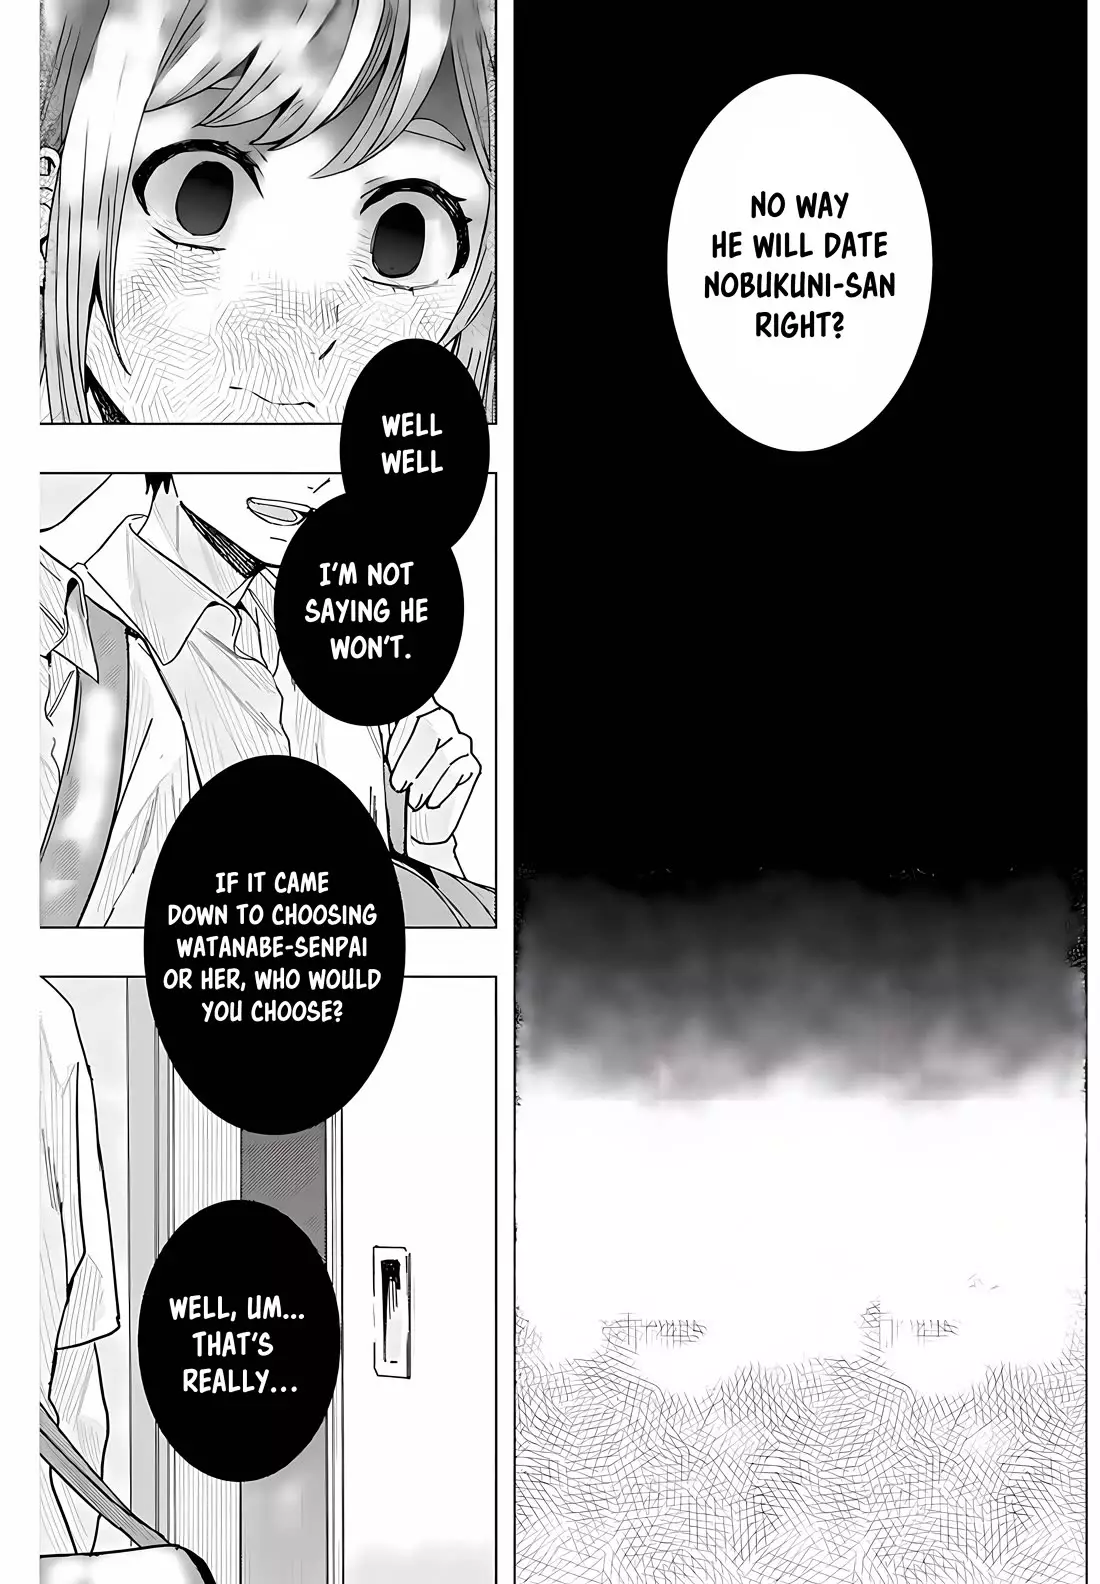 "nobukuni-San" Does She Like Me? - 28 page 10-c882f967